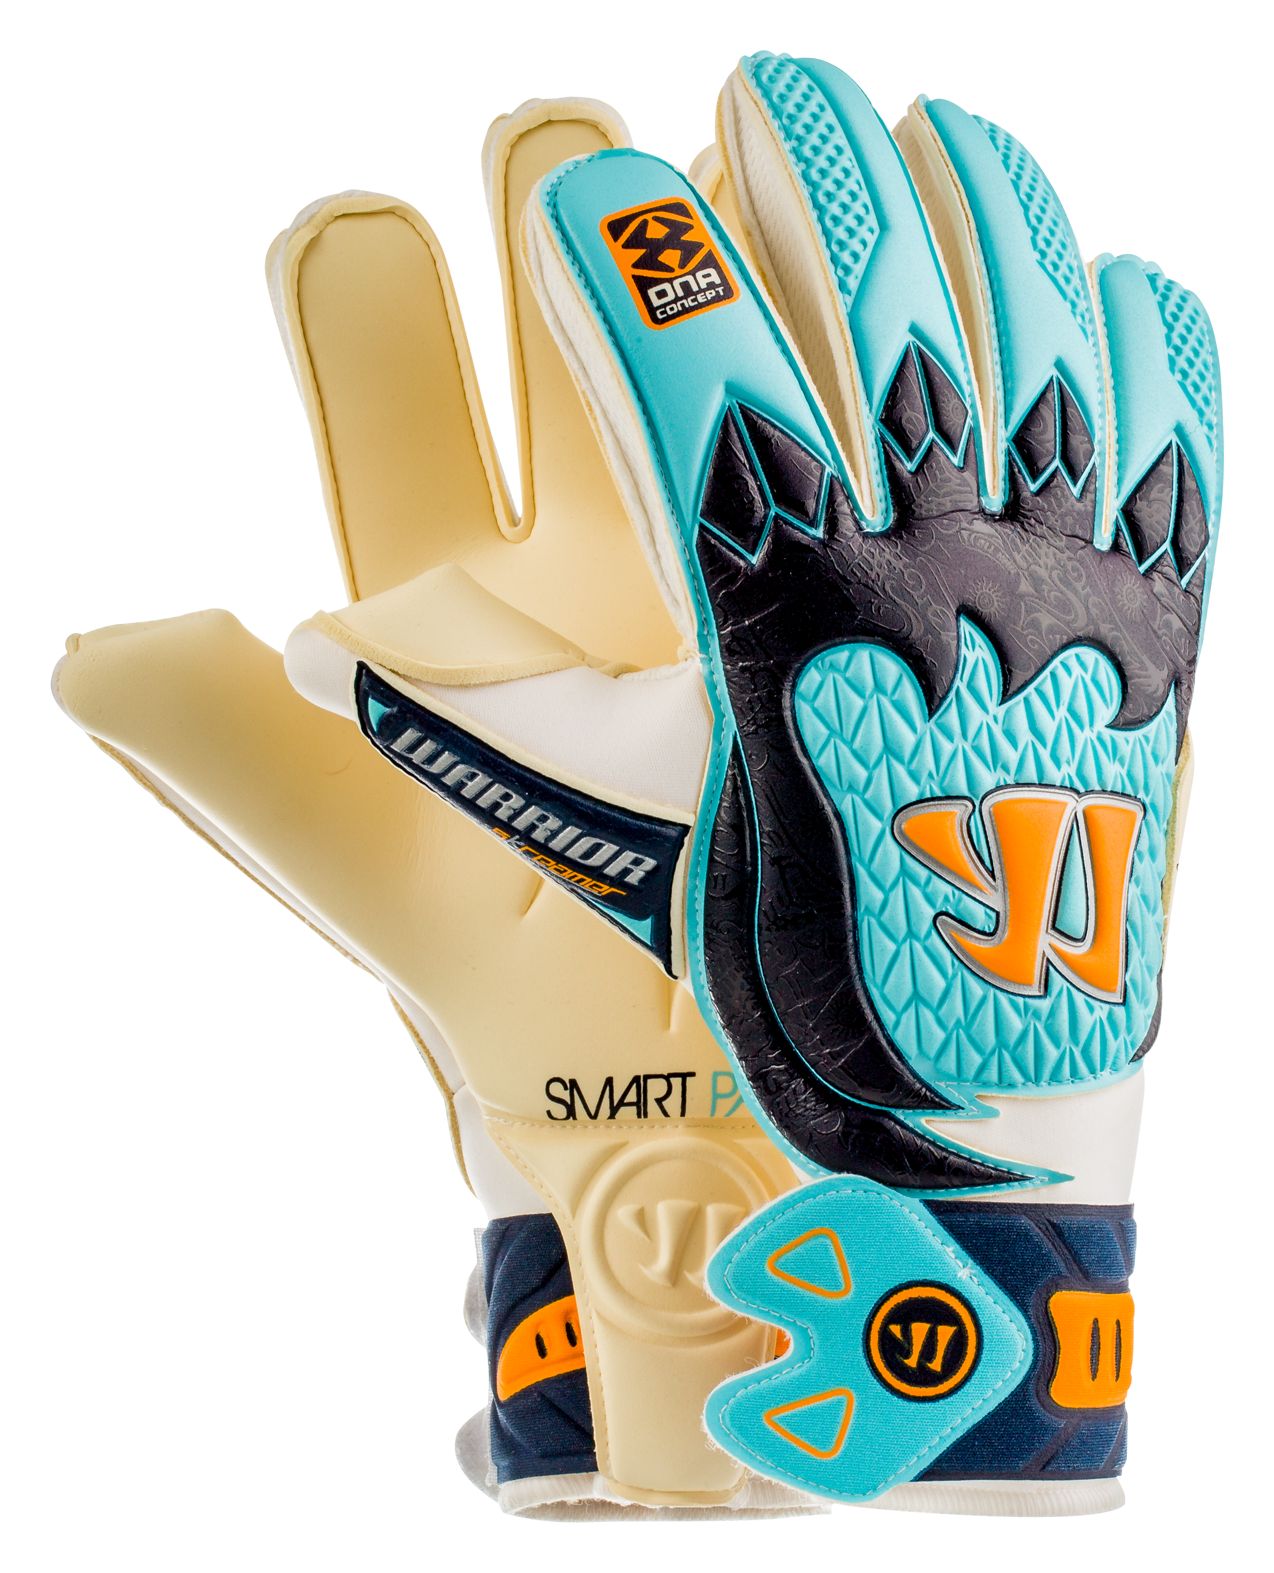 Skreamer Pro Goalkeeper Gloves, White with Blue Radiance & Insignia Blue image number 1